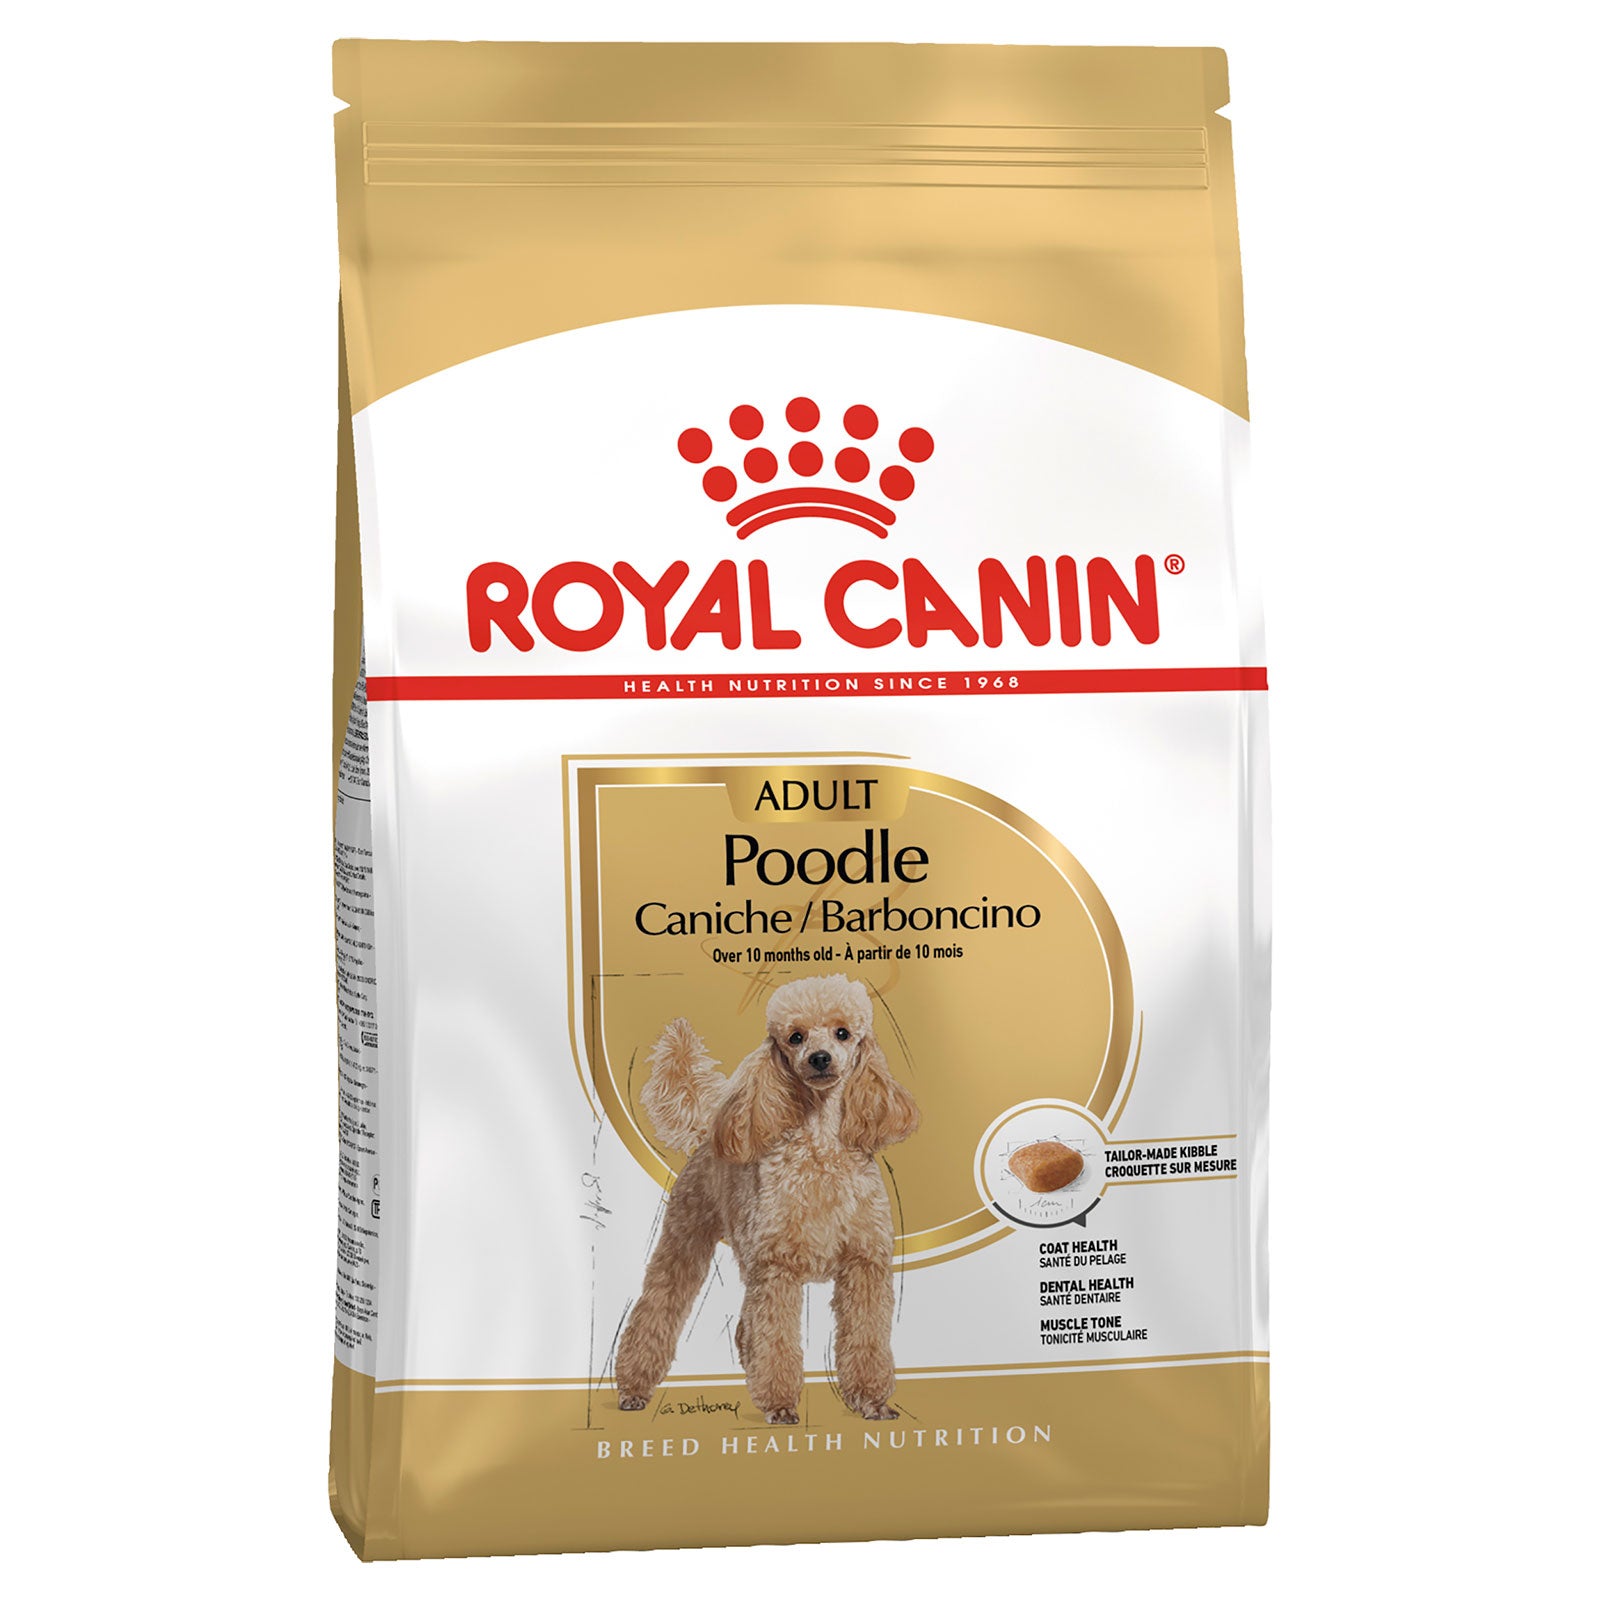 Royal Canin Dog Food Adult Poodle